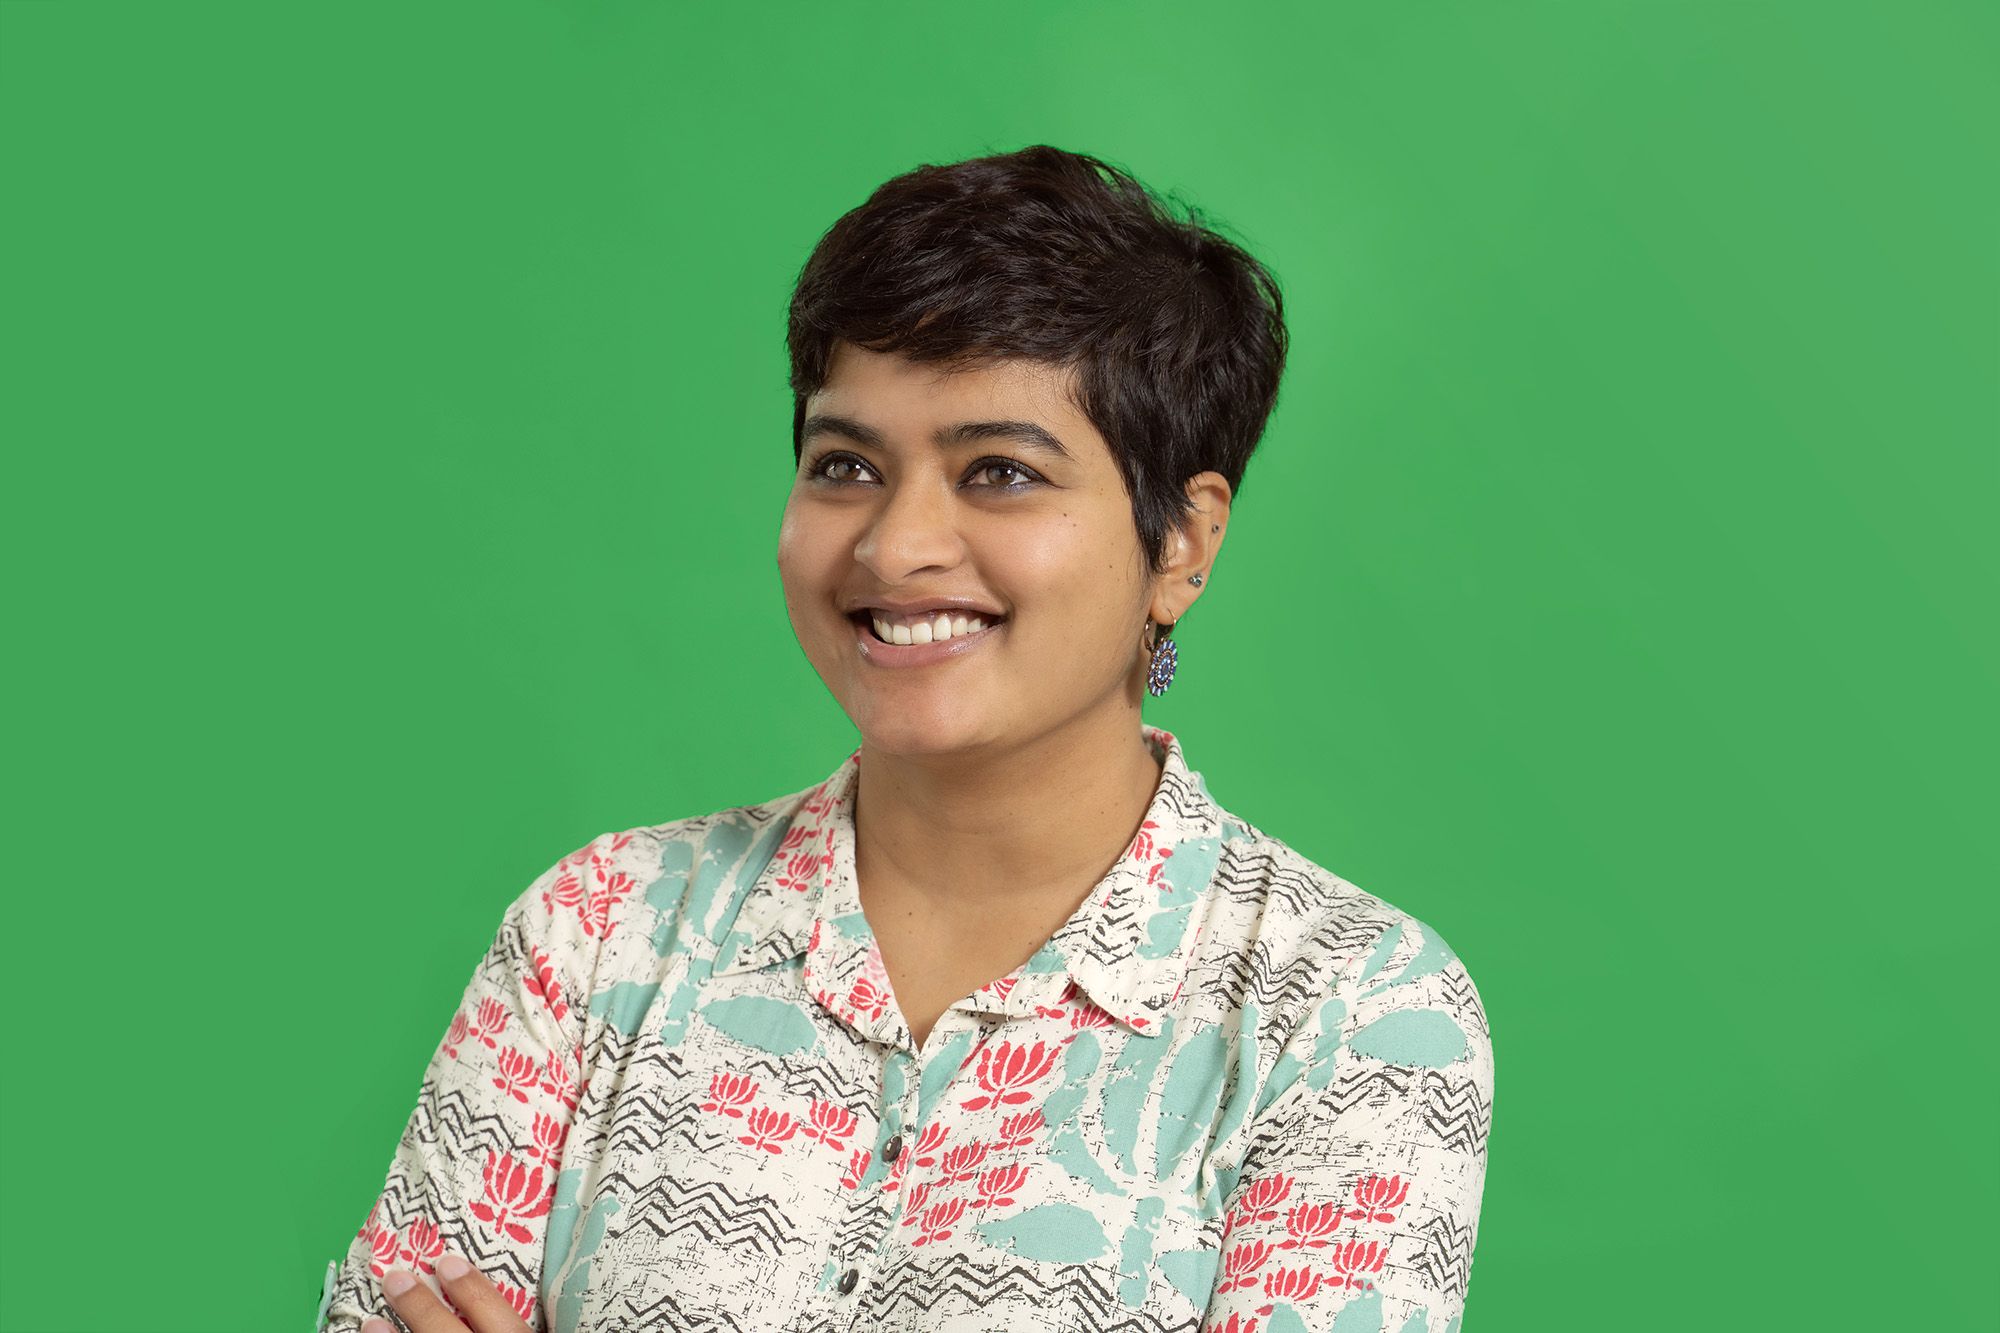 Shrutika Gunanayagam has short dark hair and brown eyes. She smiles as she stands in front of a bright green background.